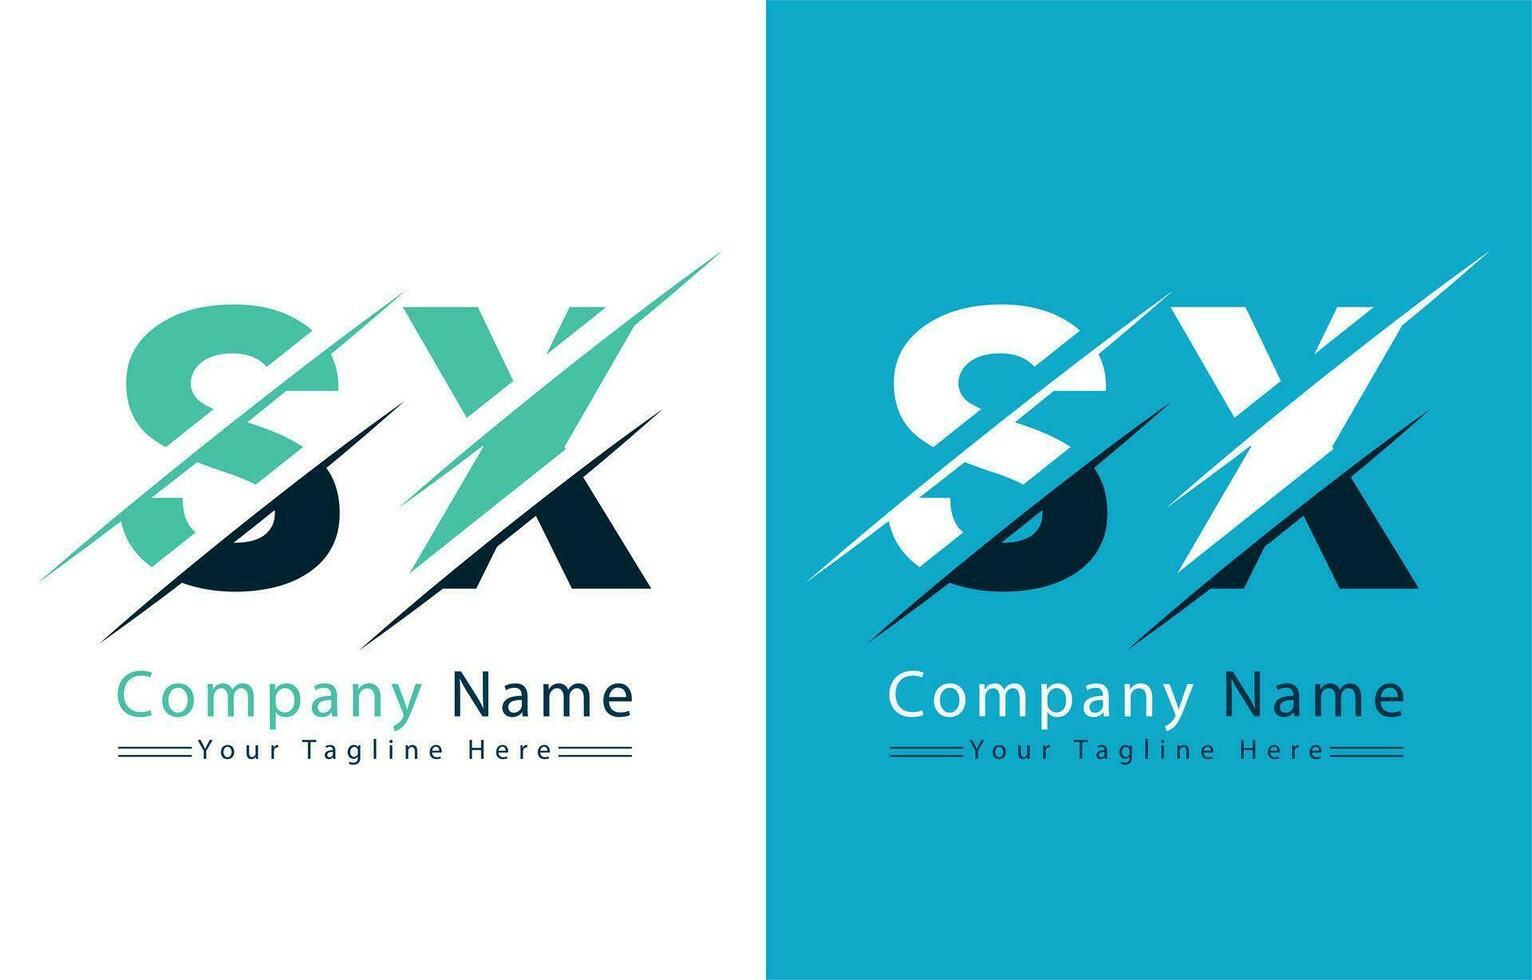 sx brev logotyp design begrepp. vektor logotyp illustration